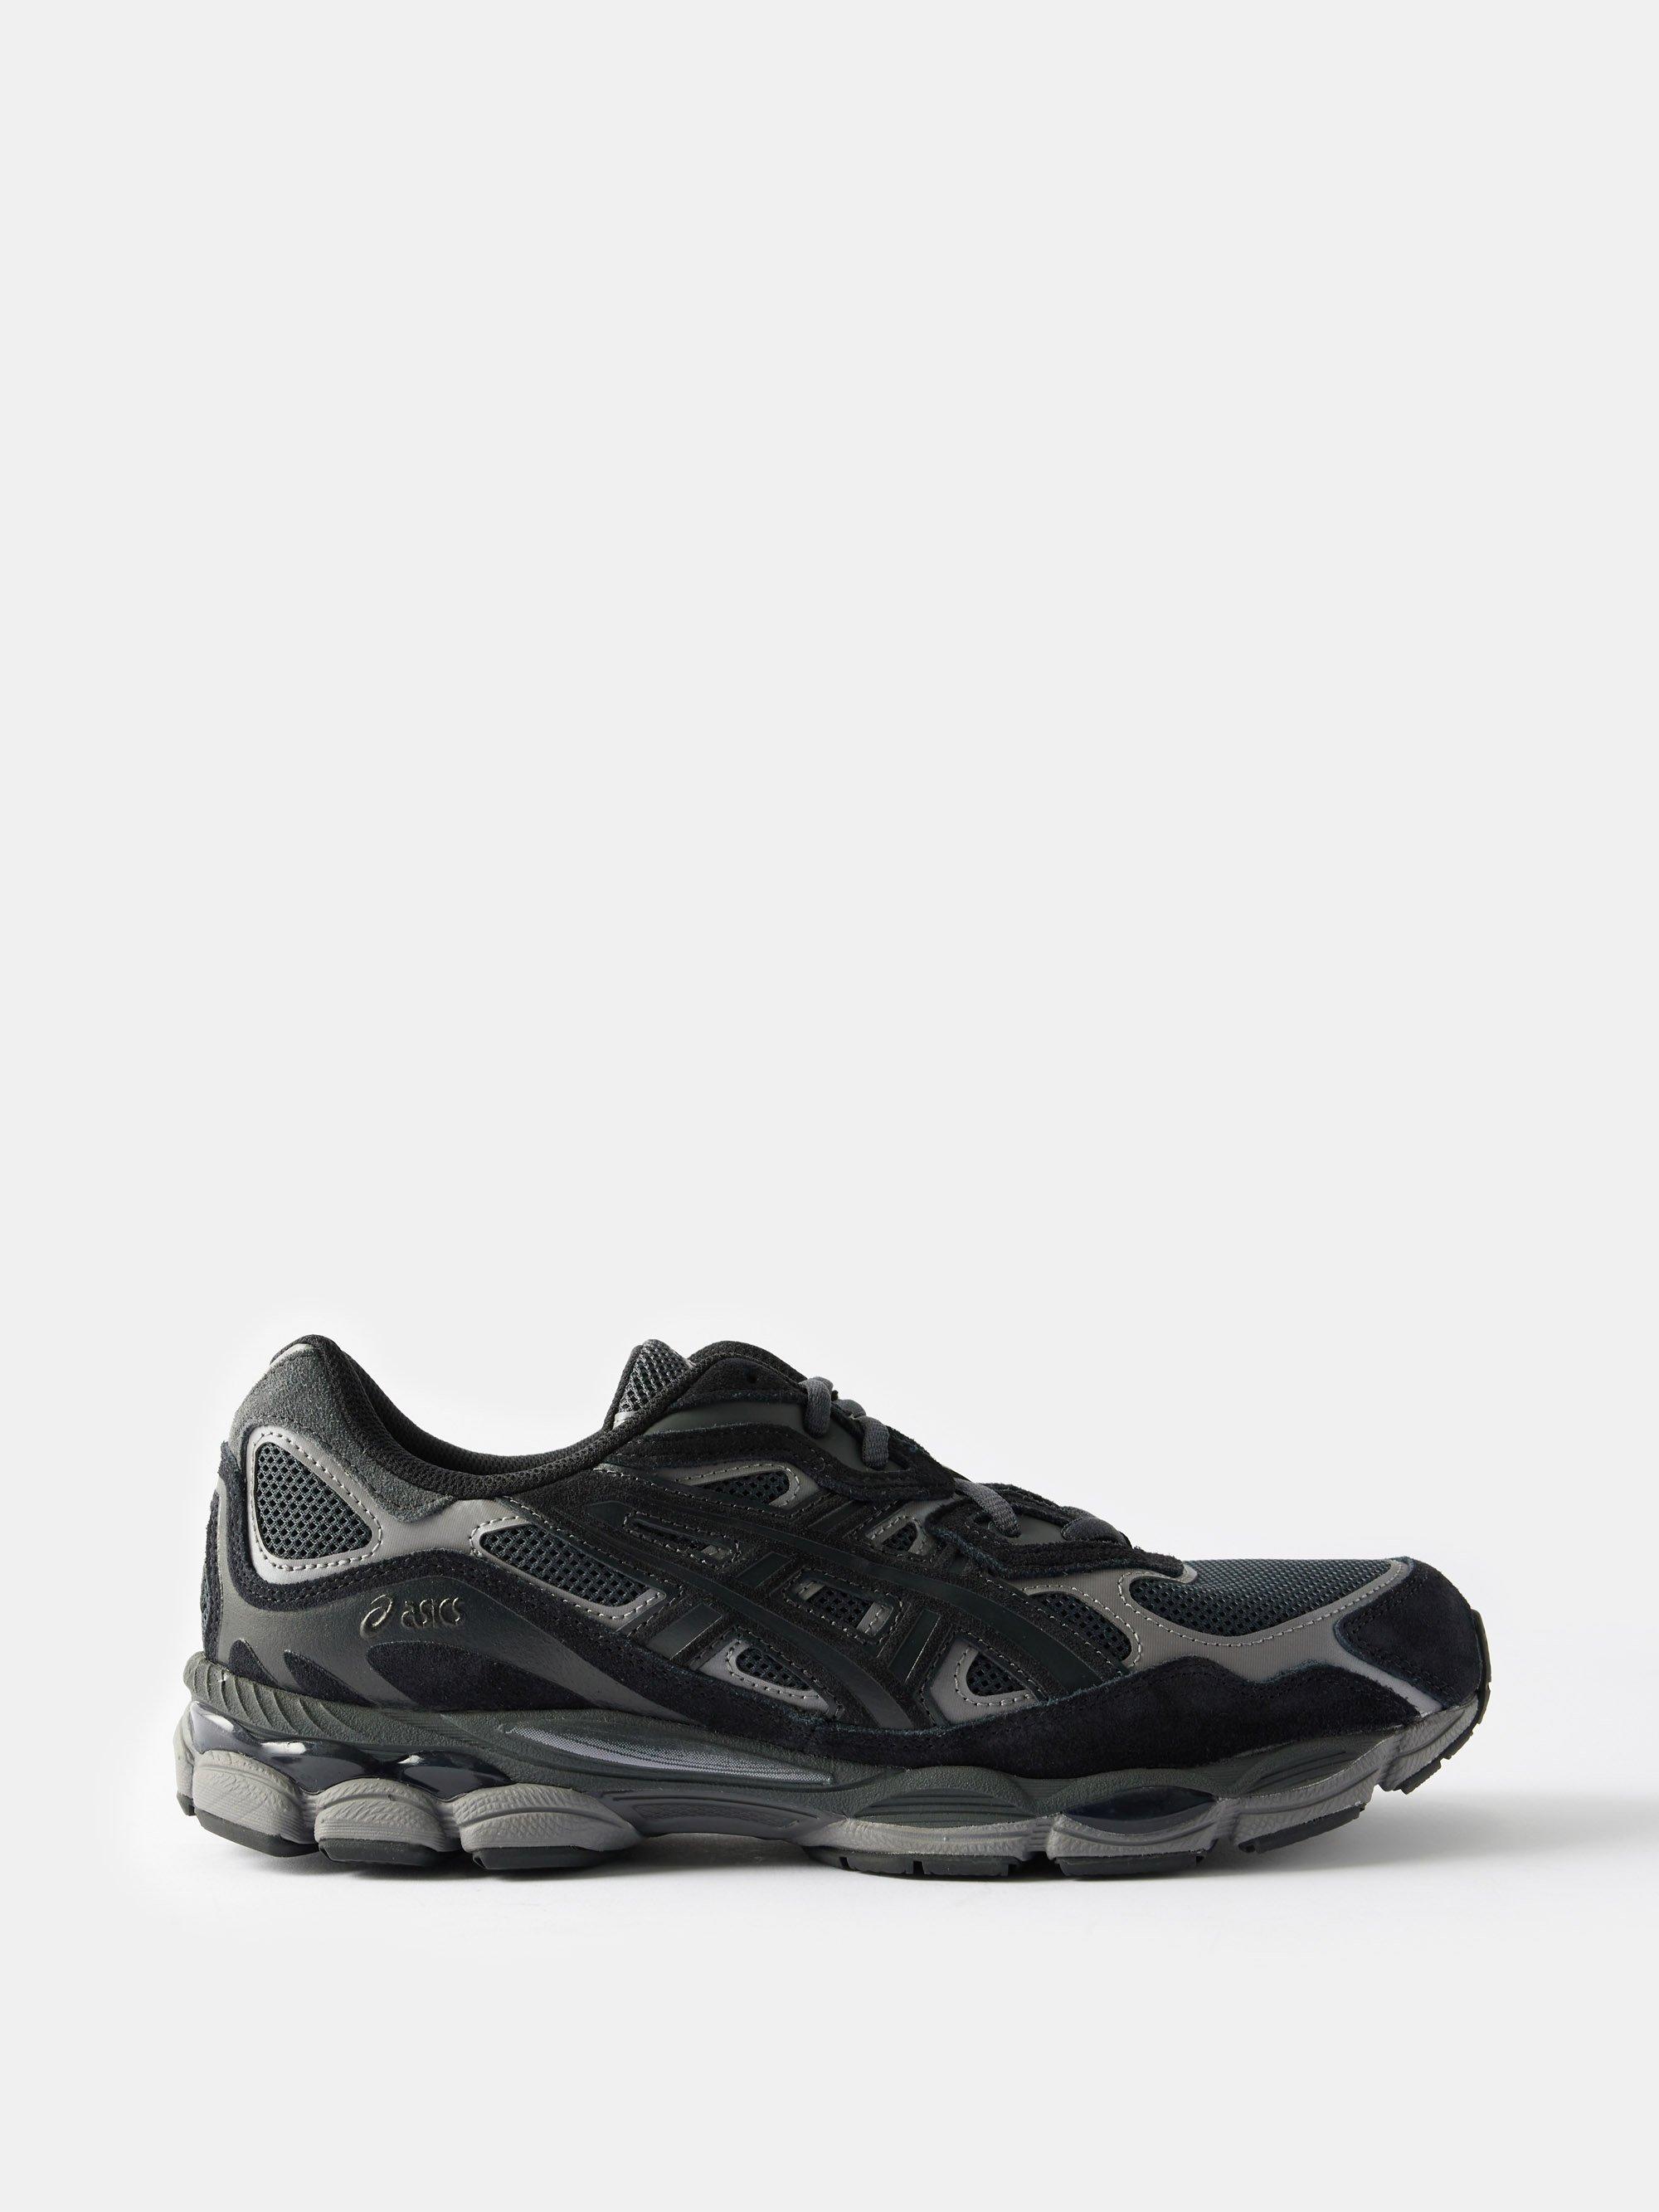 Asics Gel-nyc Sneakers Graphite Grey / Black for Men | Lyst